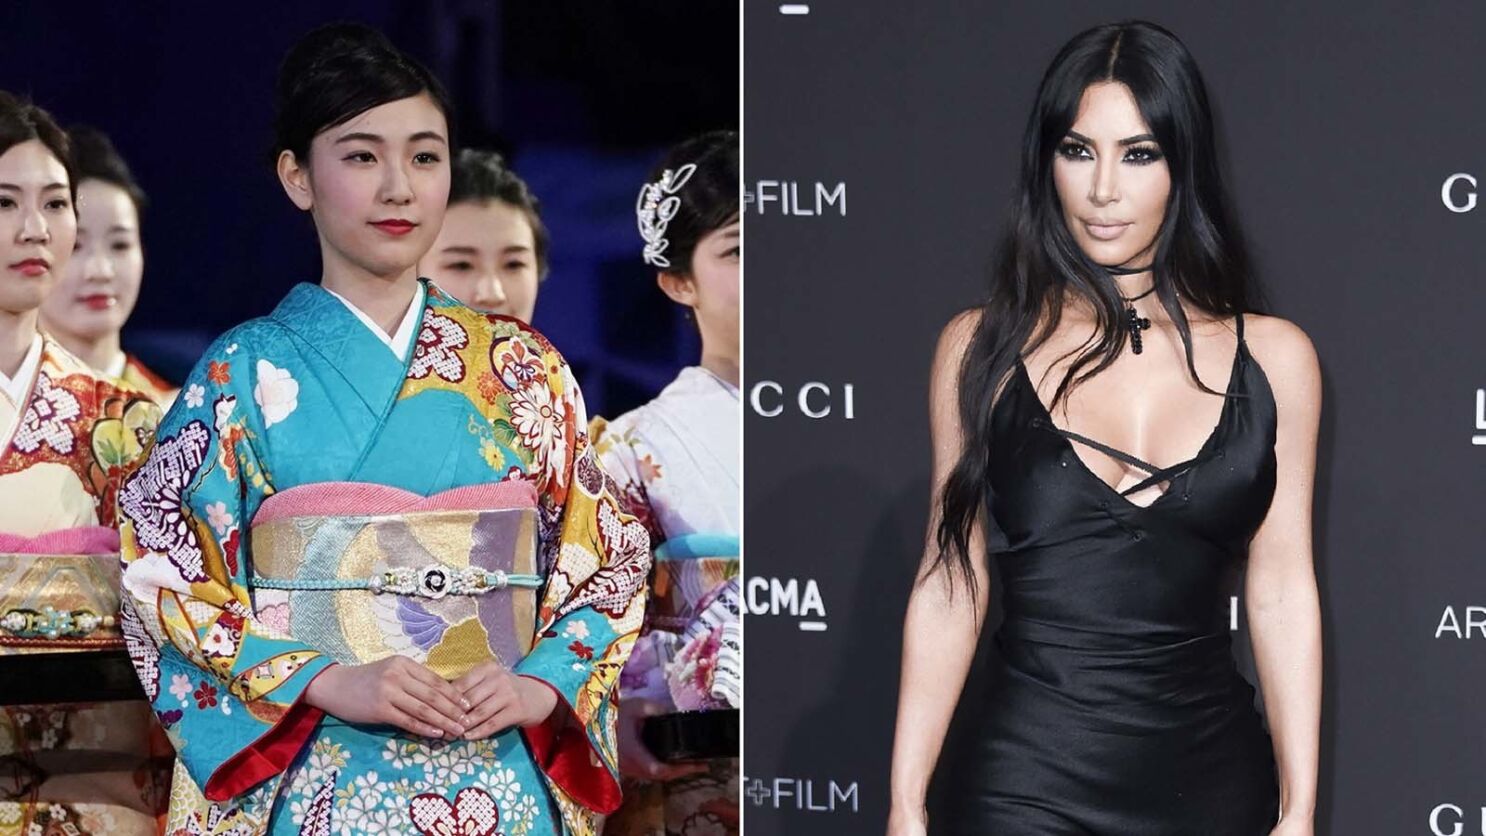 Kim Kardashian Kimono brand and says she won't change the name - Los Angeles Times